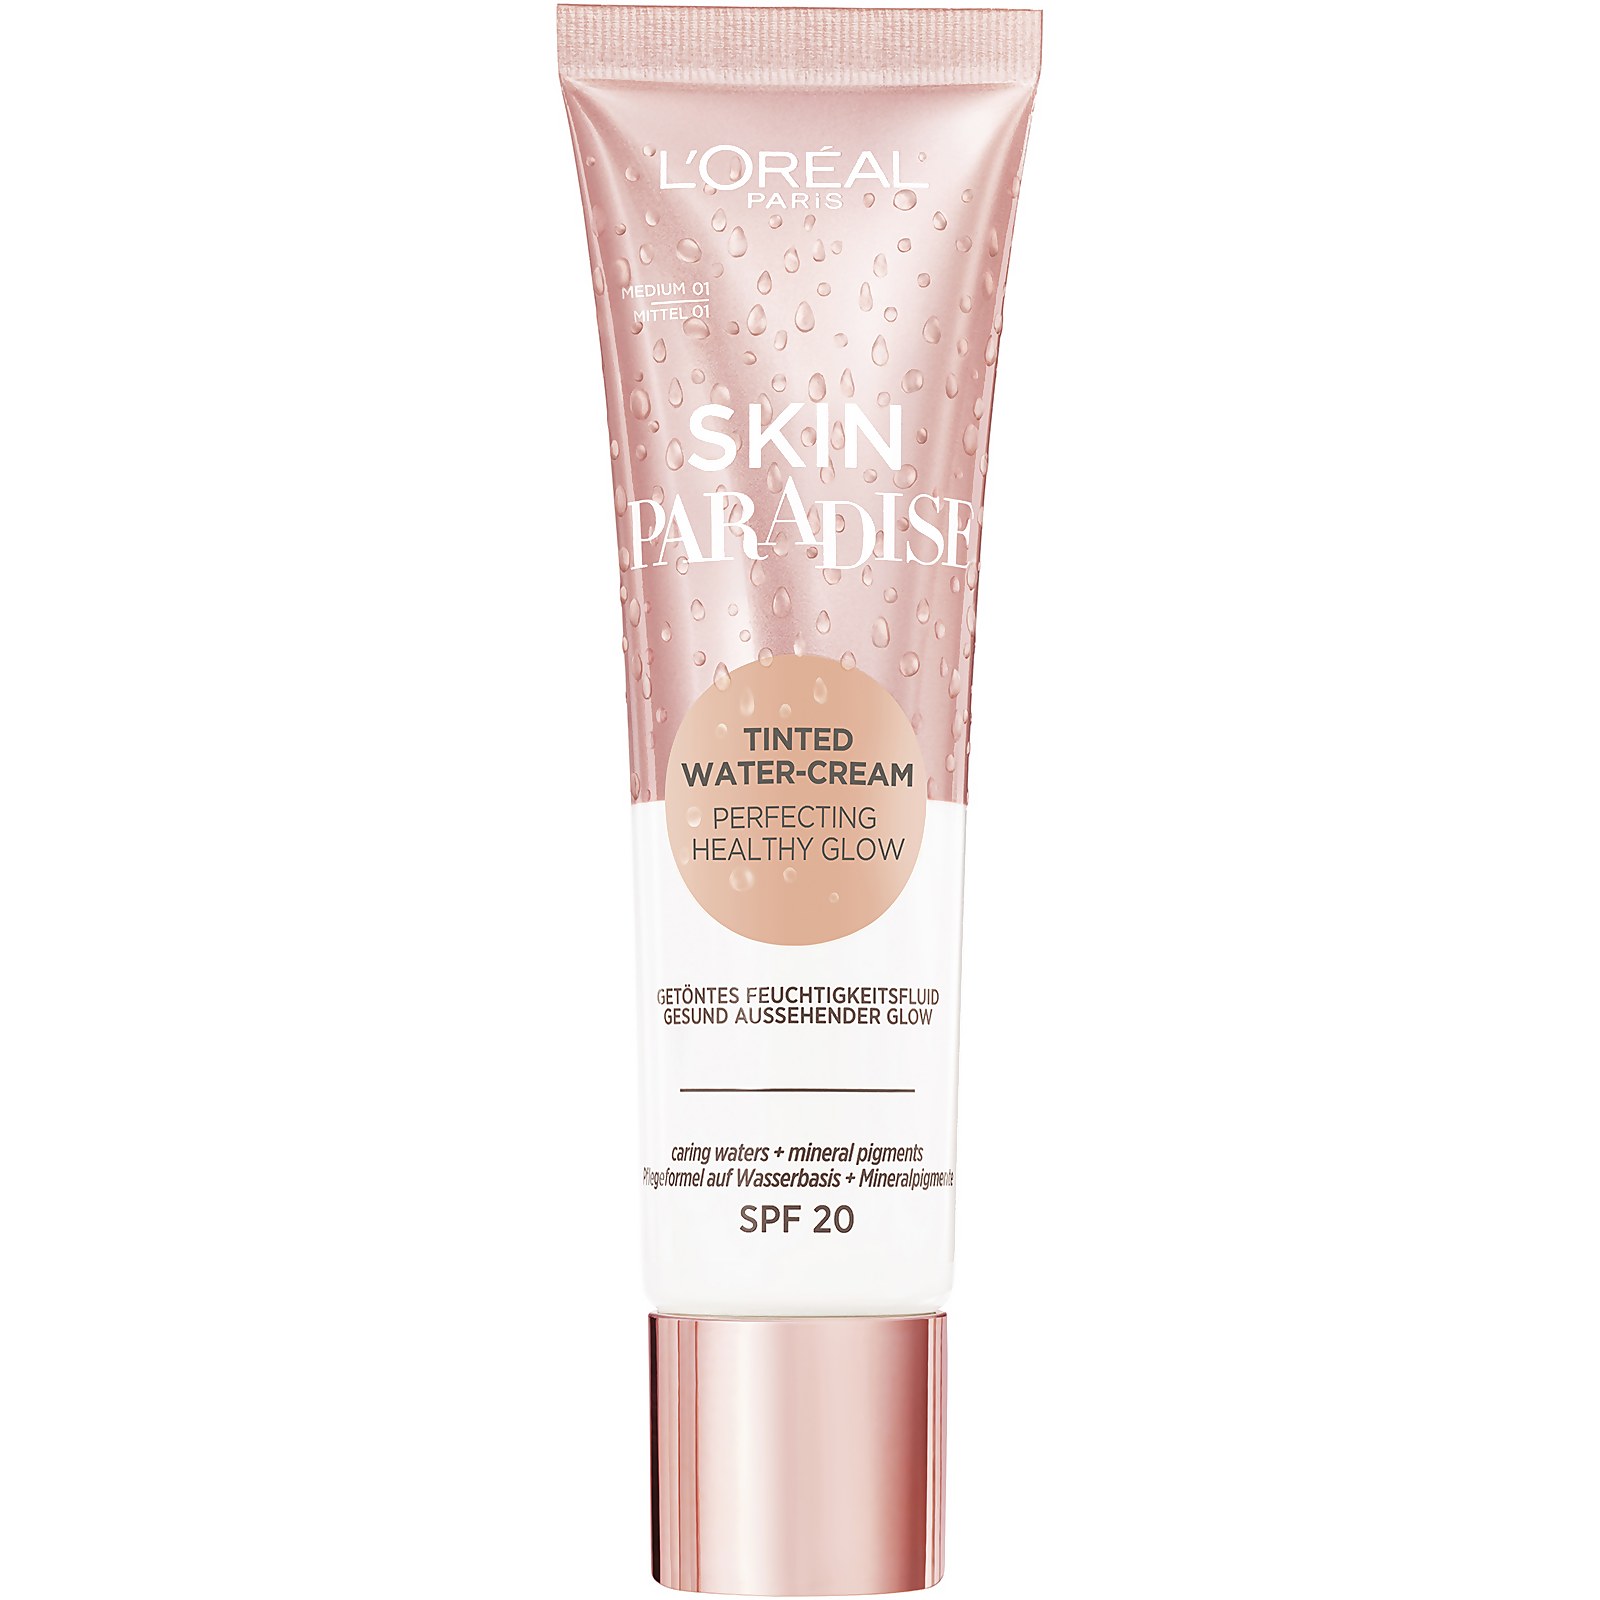 L’Oréal Paris Skin Paradise SPF20 Tinted Water-Cream 30ml (Various Shades) - Medium 01